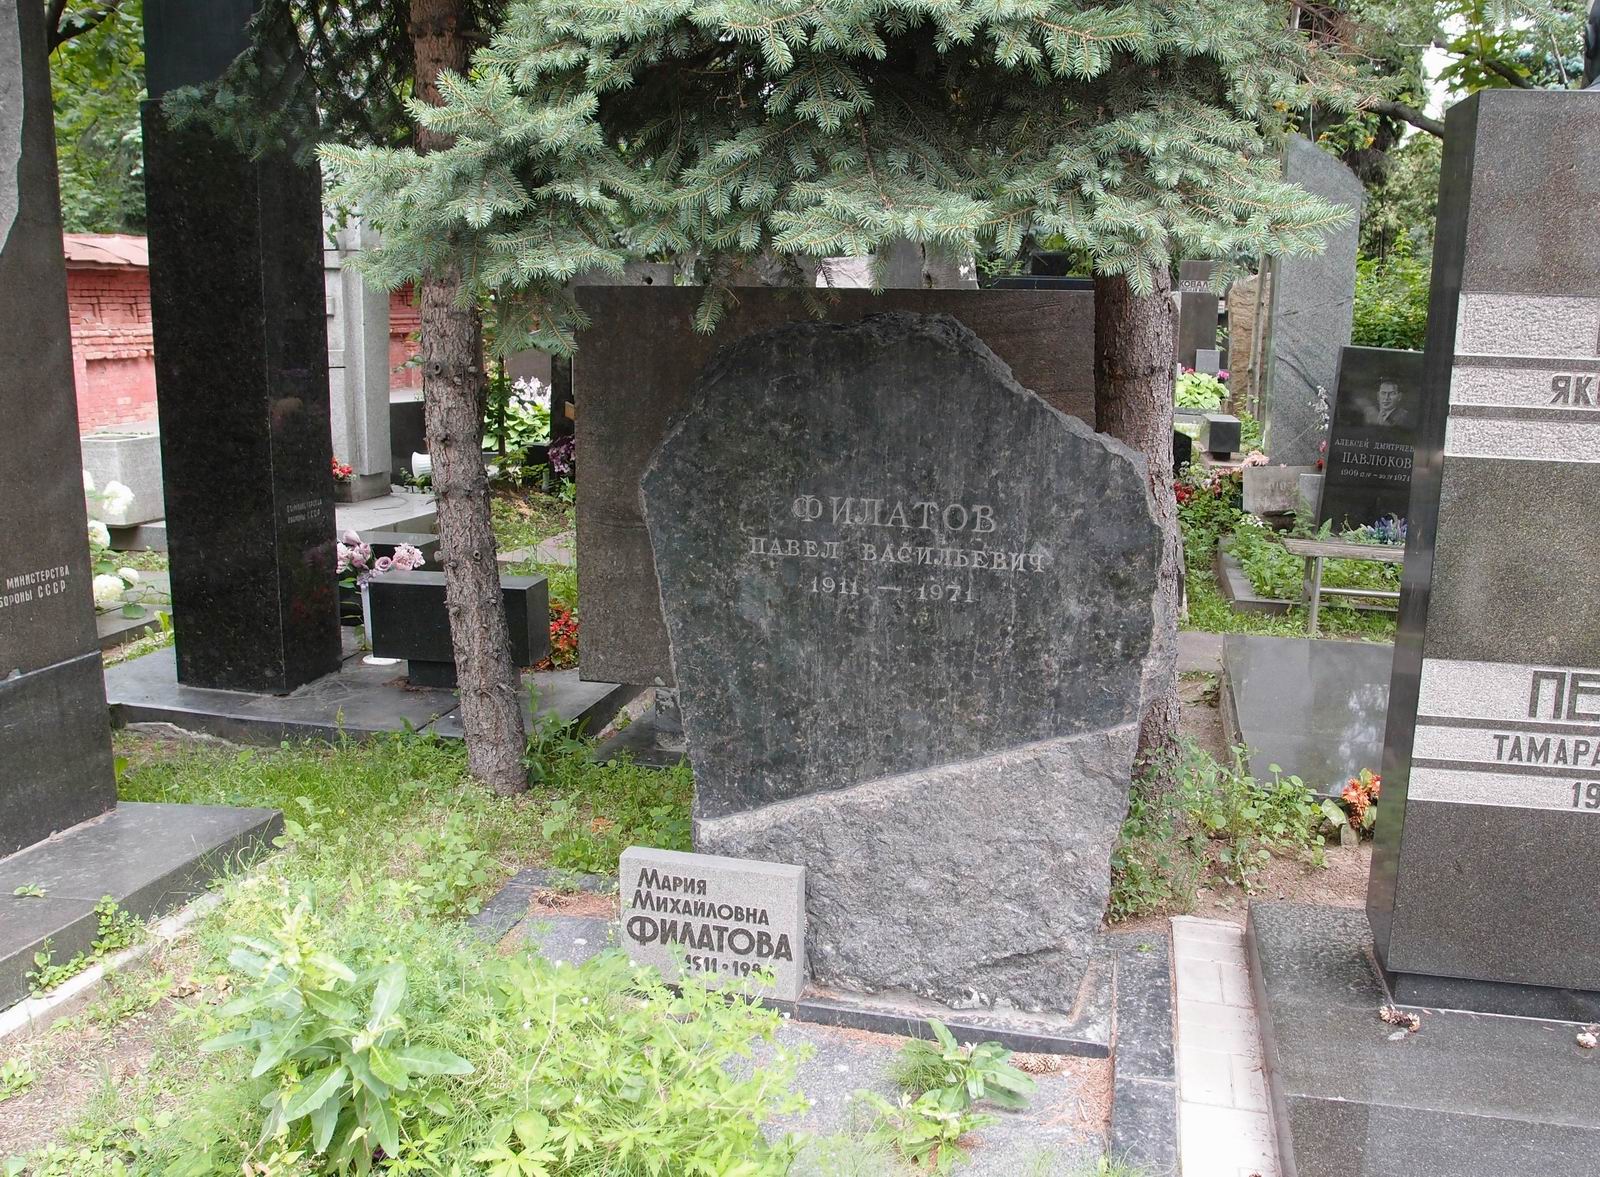 Памятник на могиле Филатова П.В. (1911-1971), на Новодевичьем кладбище (7-20-3).